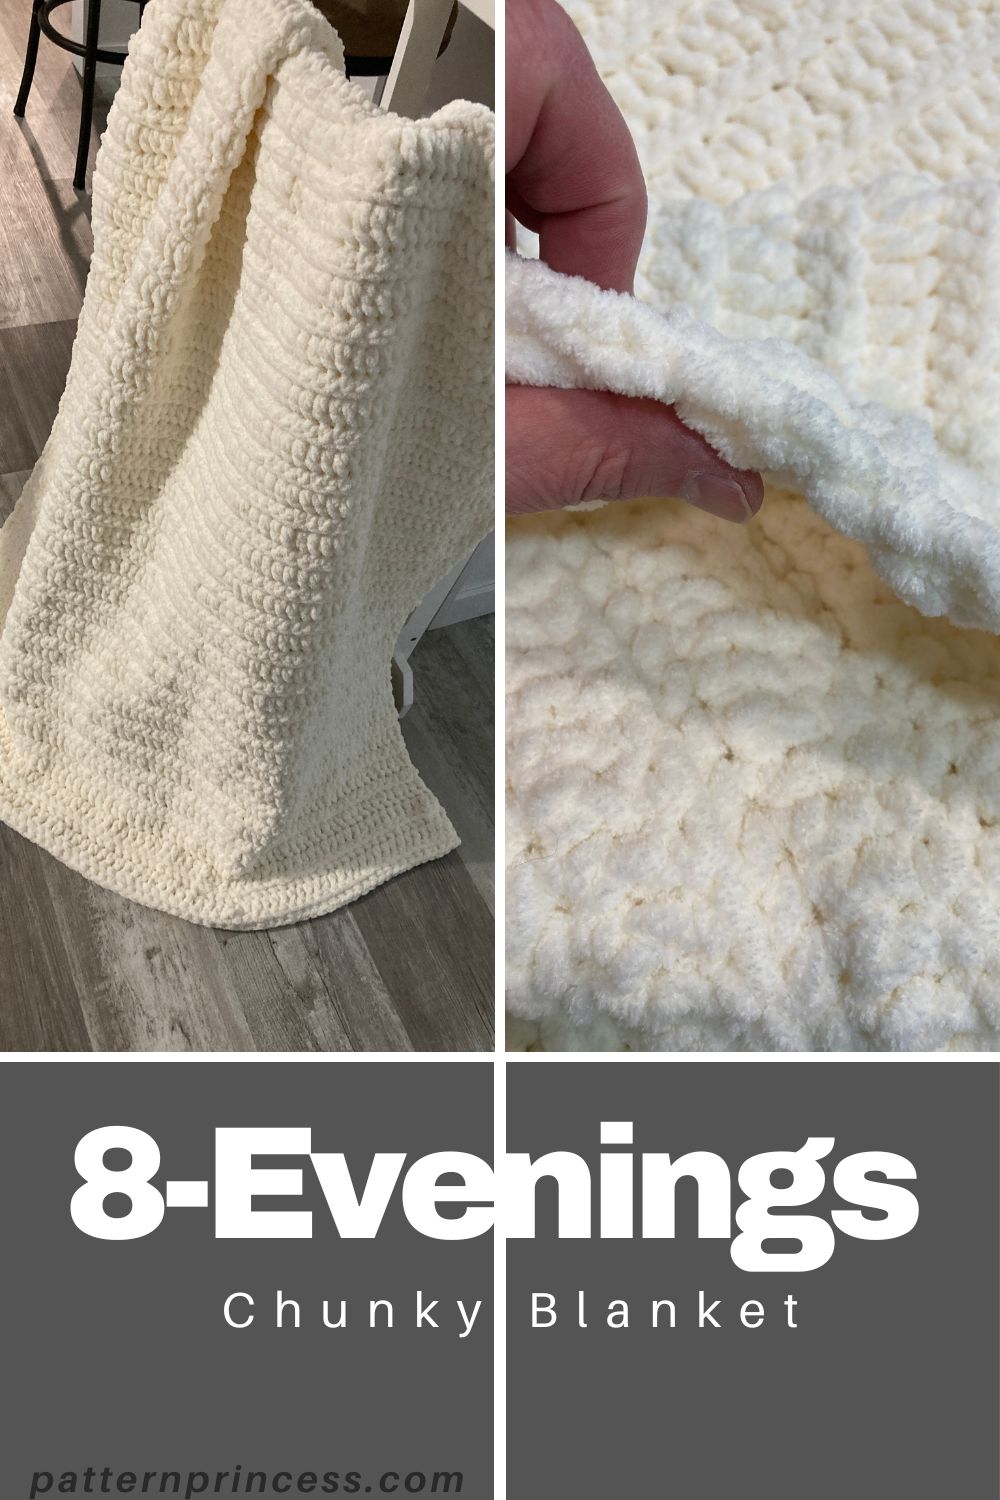 8-Evenings chunky blanket